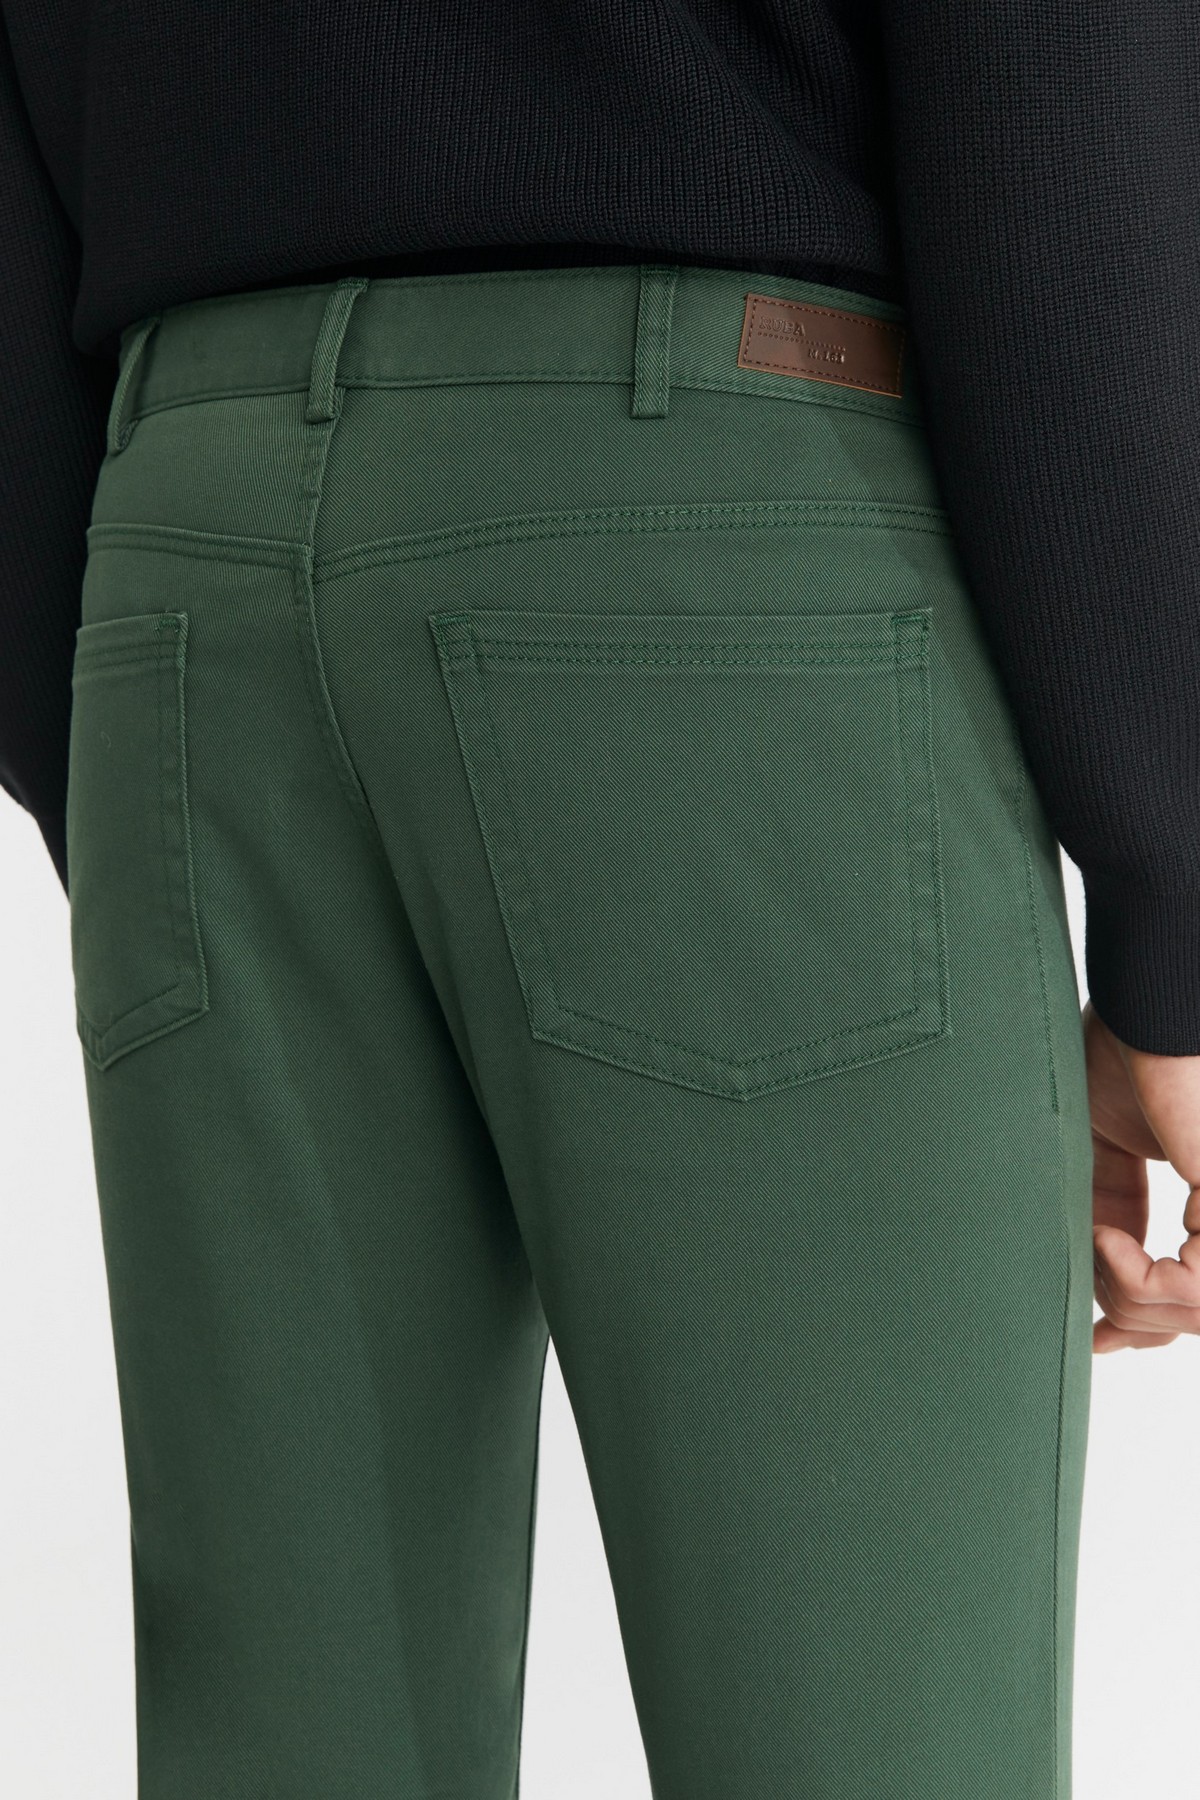 Ruba Pantolon Regular Fit 5 Cep Yeşil Gabardine Pantolon | Ruba